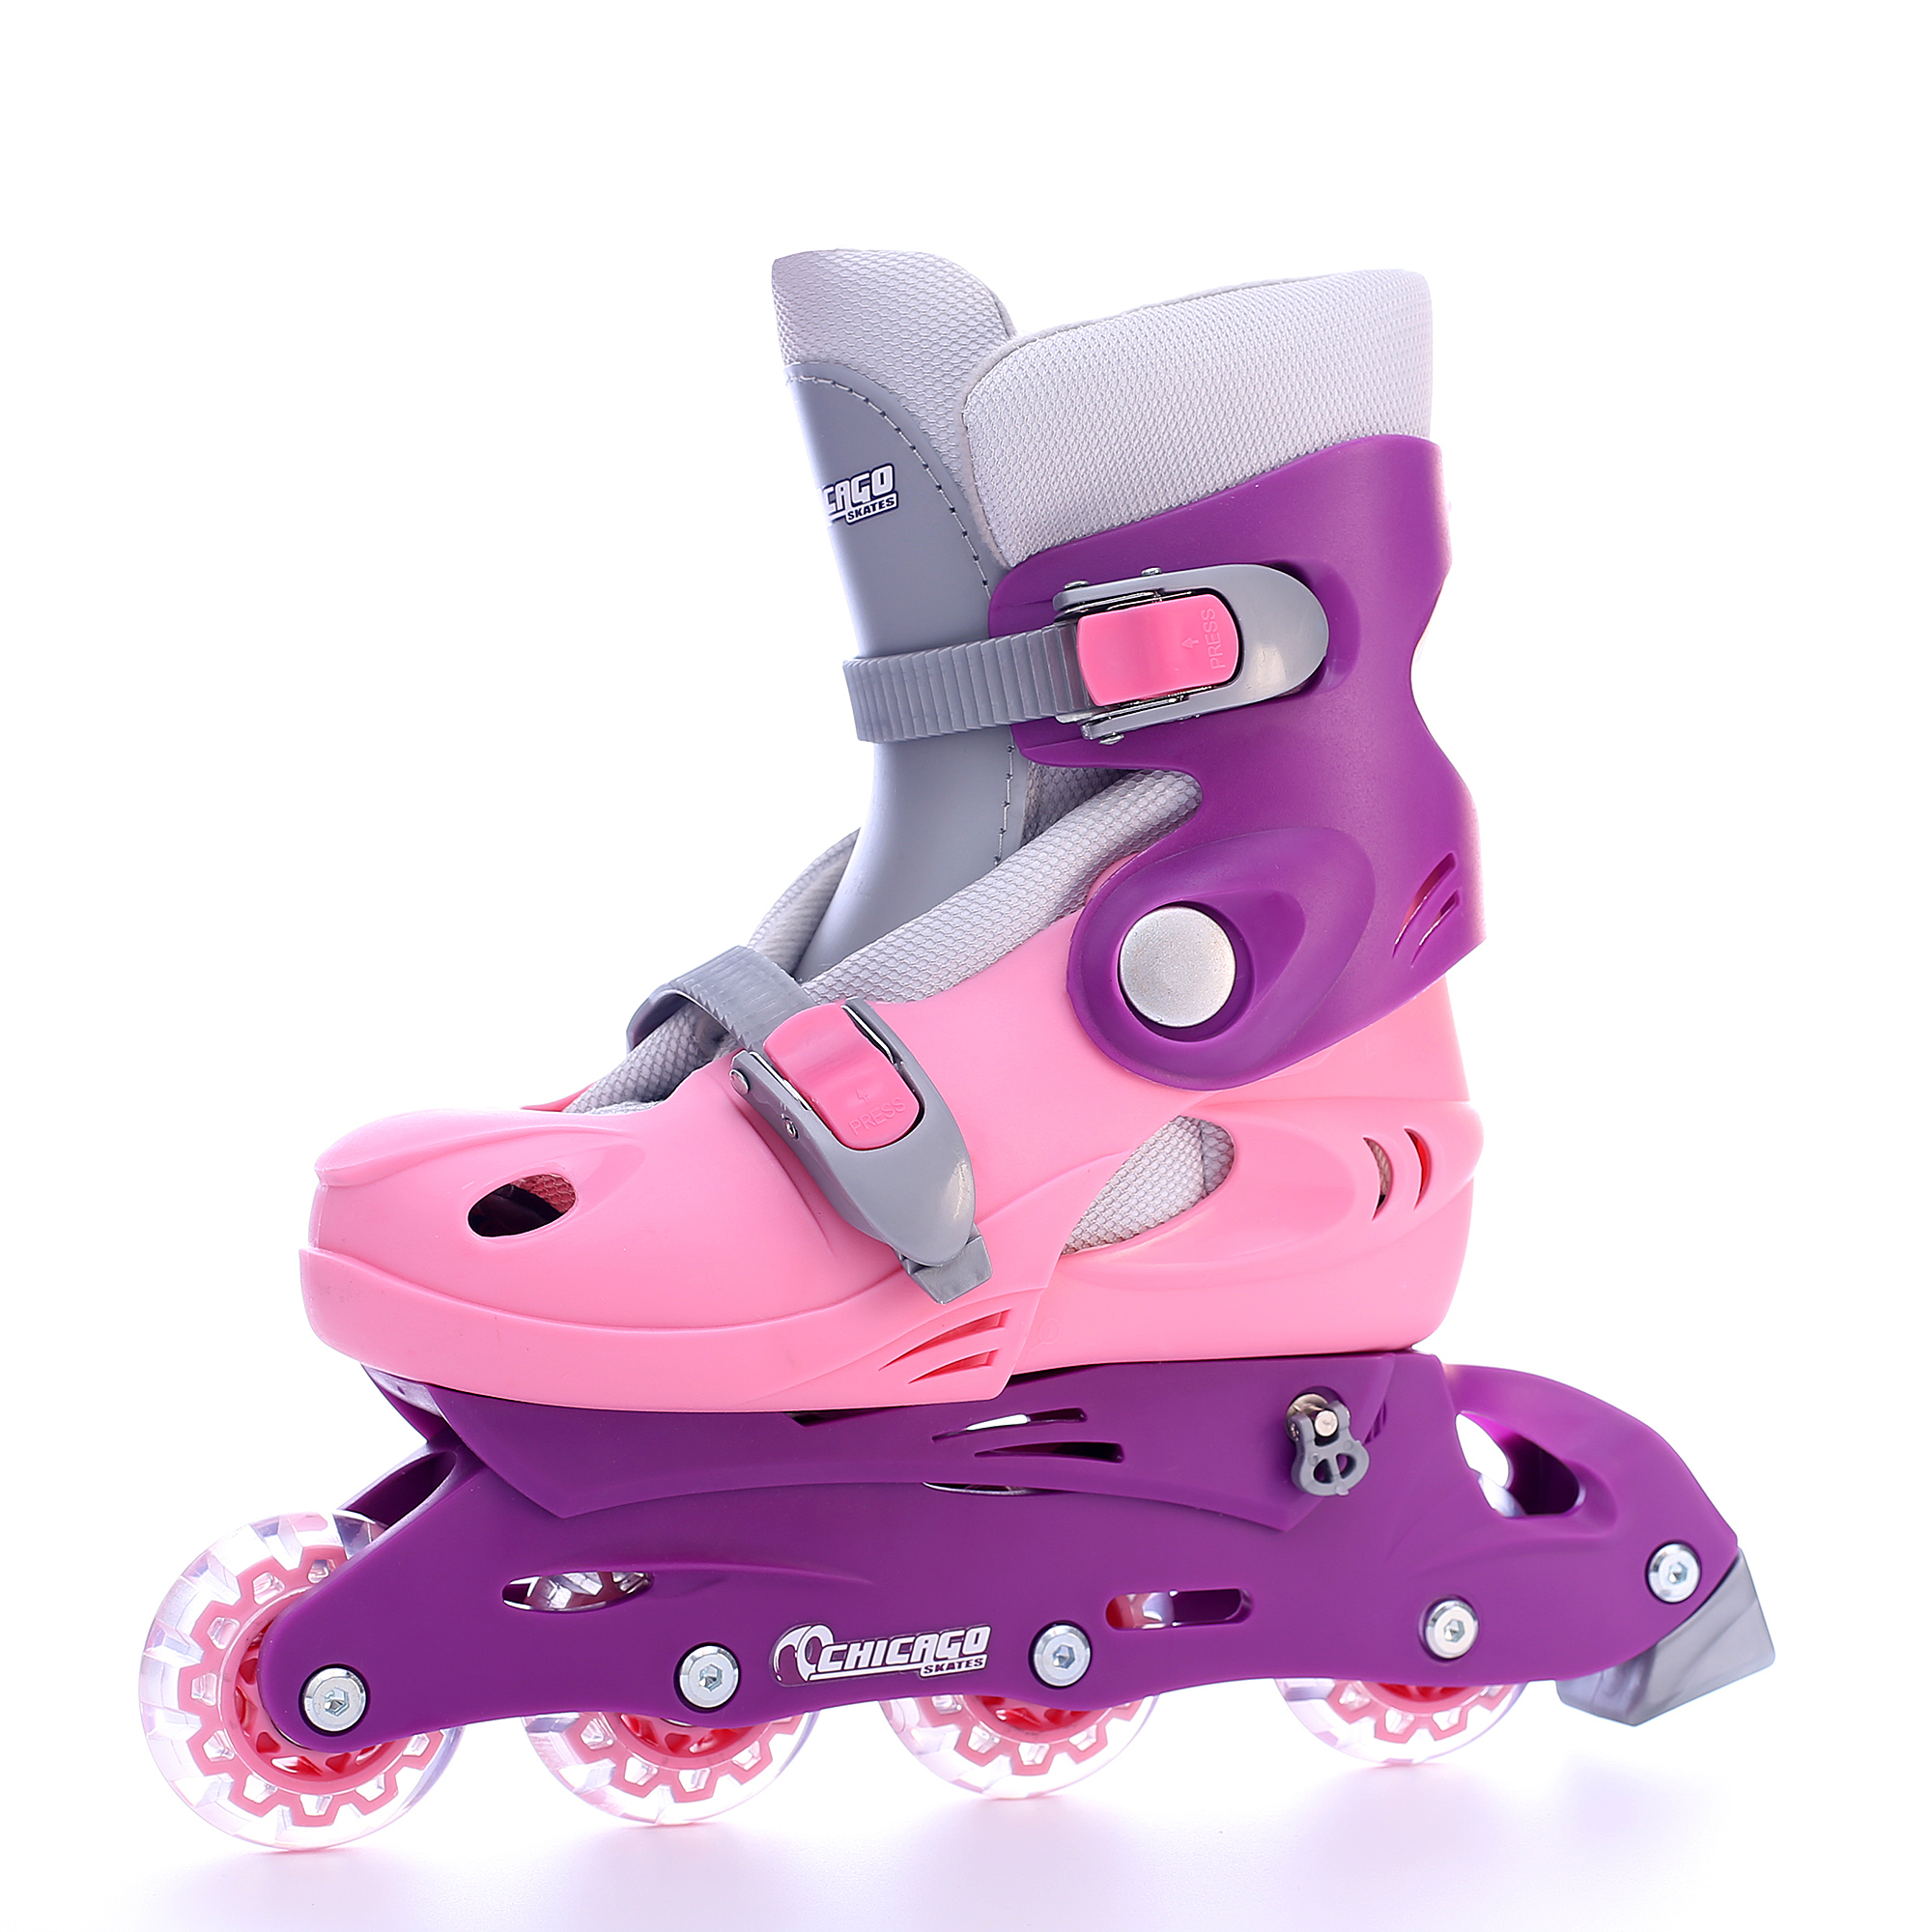 Chicago Girls' Adjustable Inline Training Skate Combo Set Pink/Purple/Gray, Size 1-4 - image 2 of 13